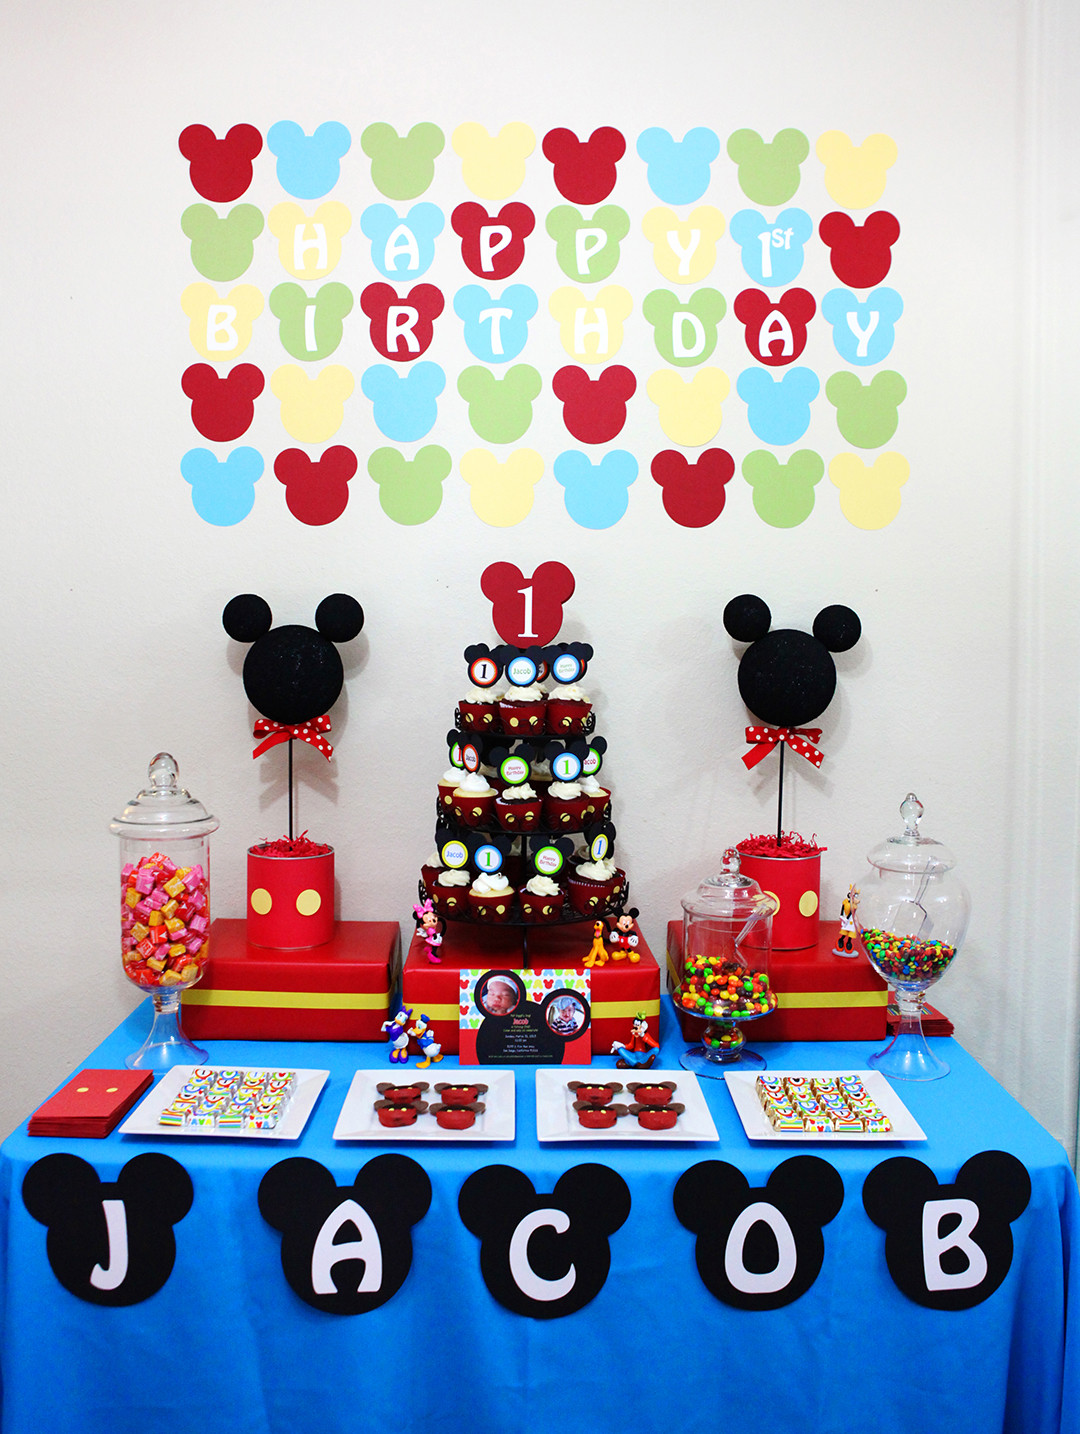 Mickey Mouse Birthday Decor
 Invitation Parlour Mickey Mouse Birthday Party